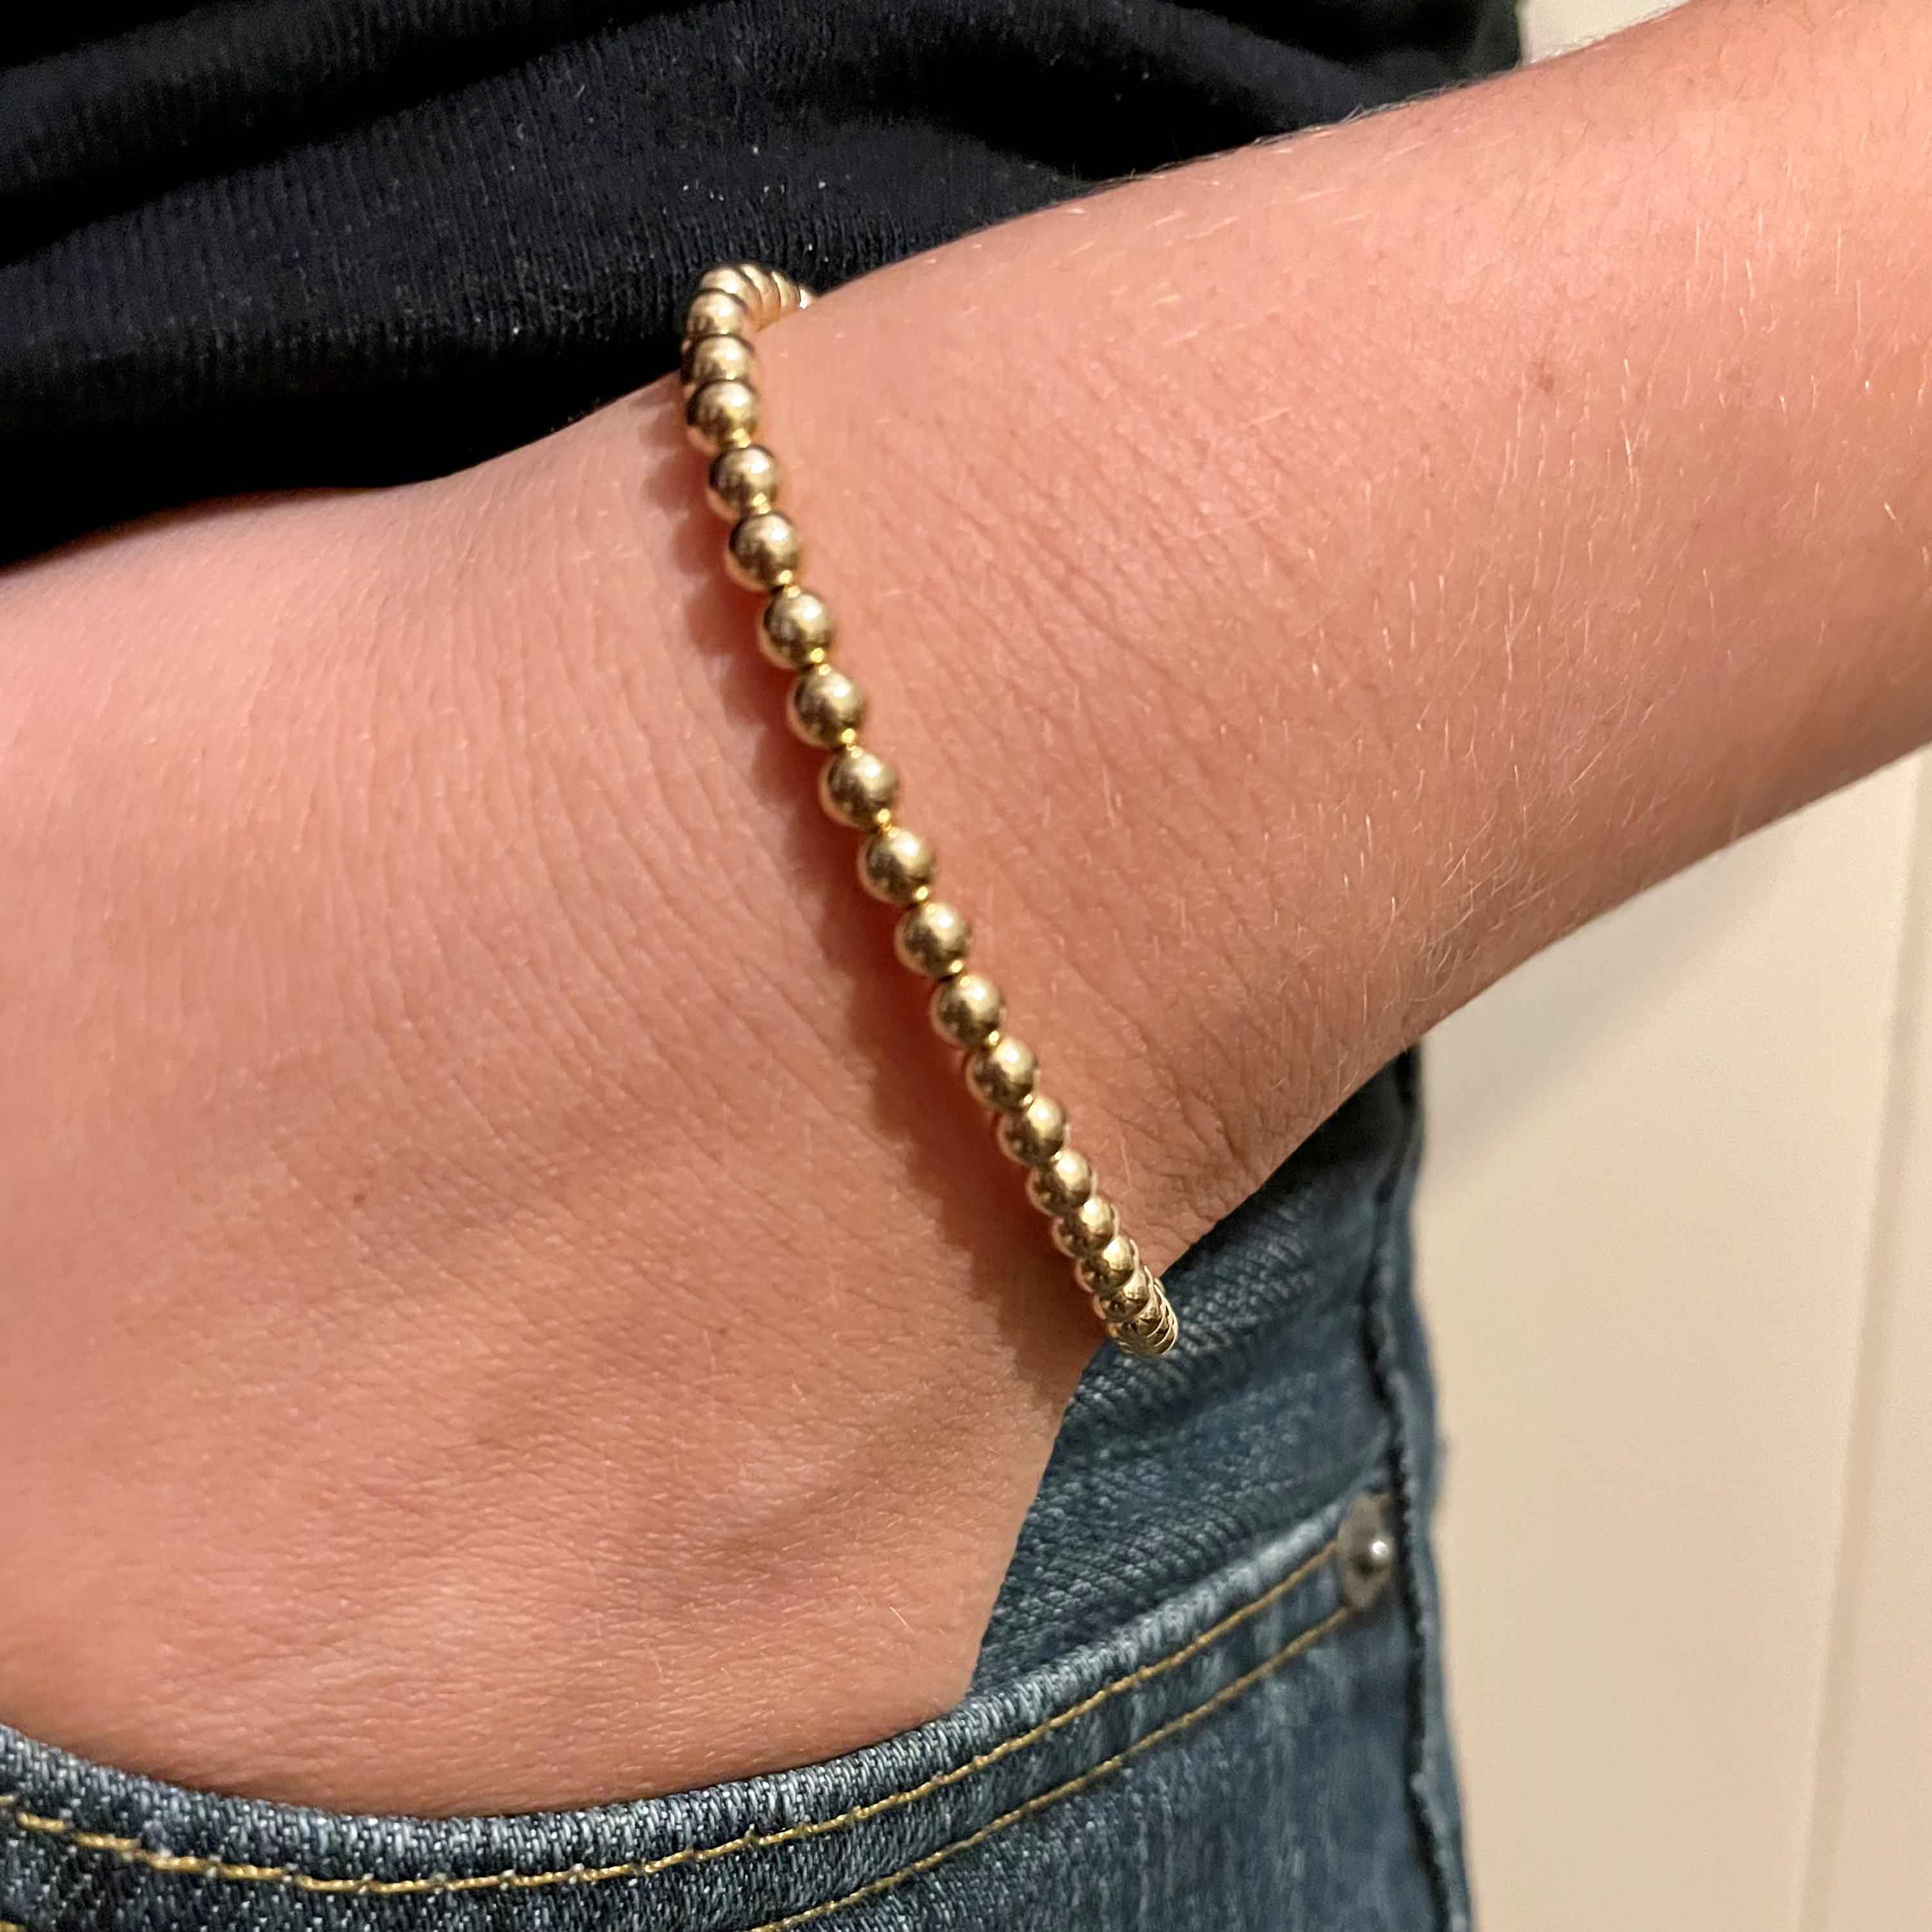 14k Gold Personalized Bracelet Stretch or Clasp - Goldie Girl Bracelets